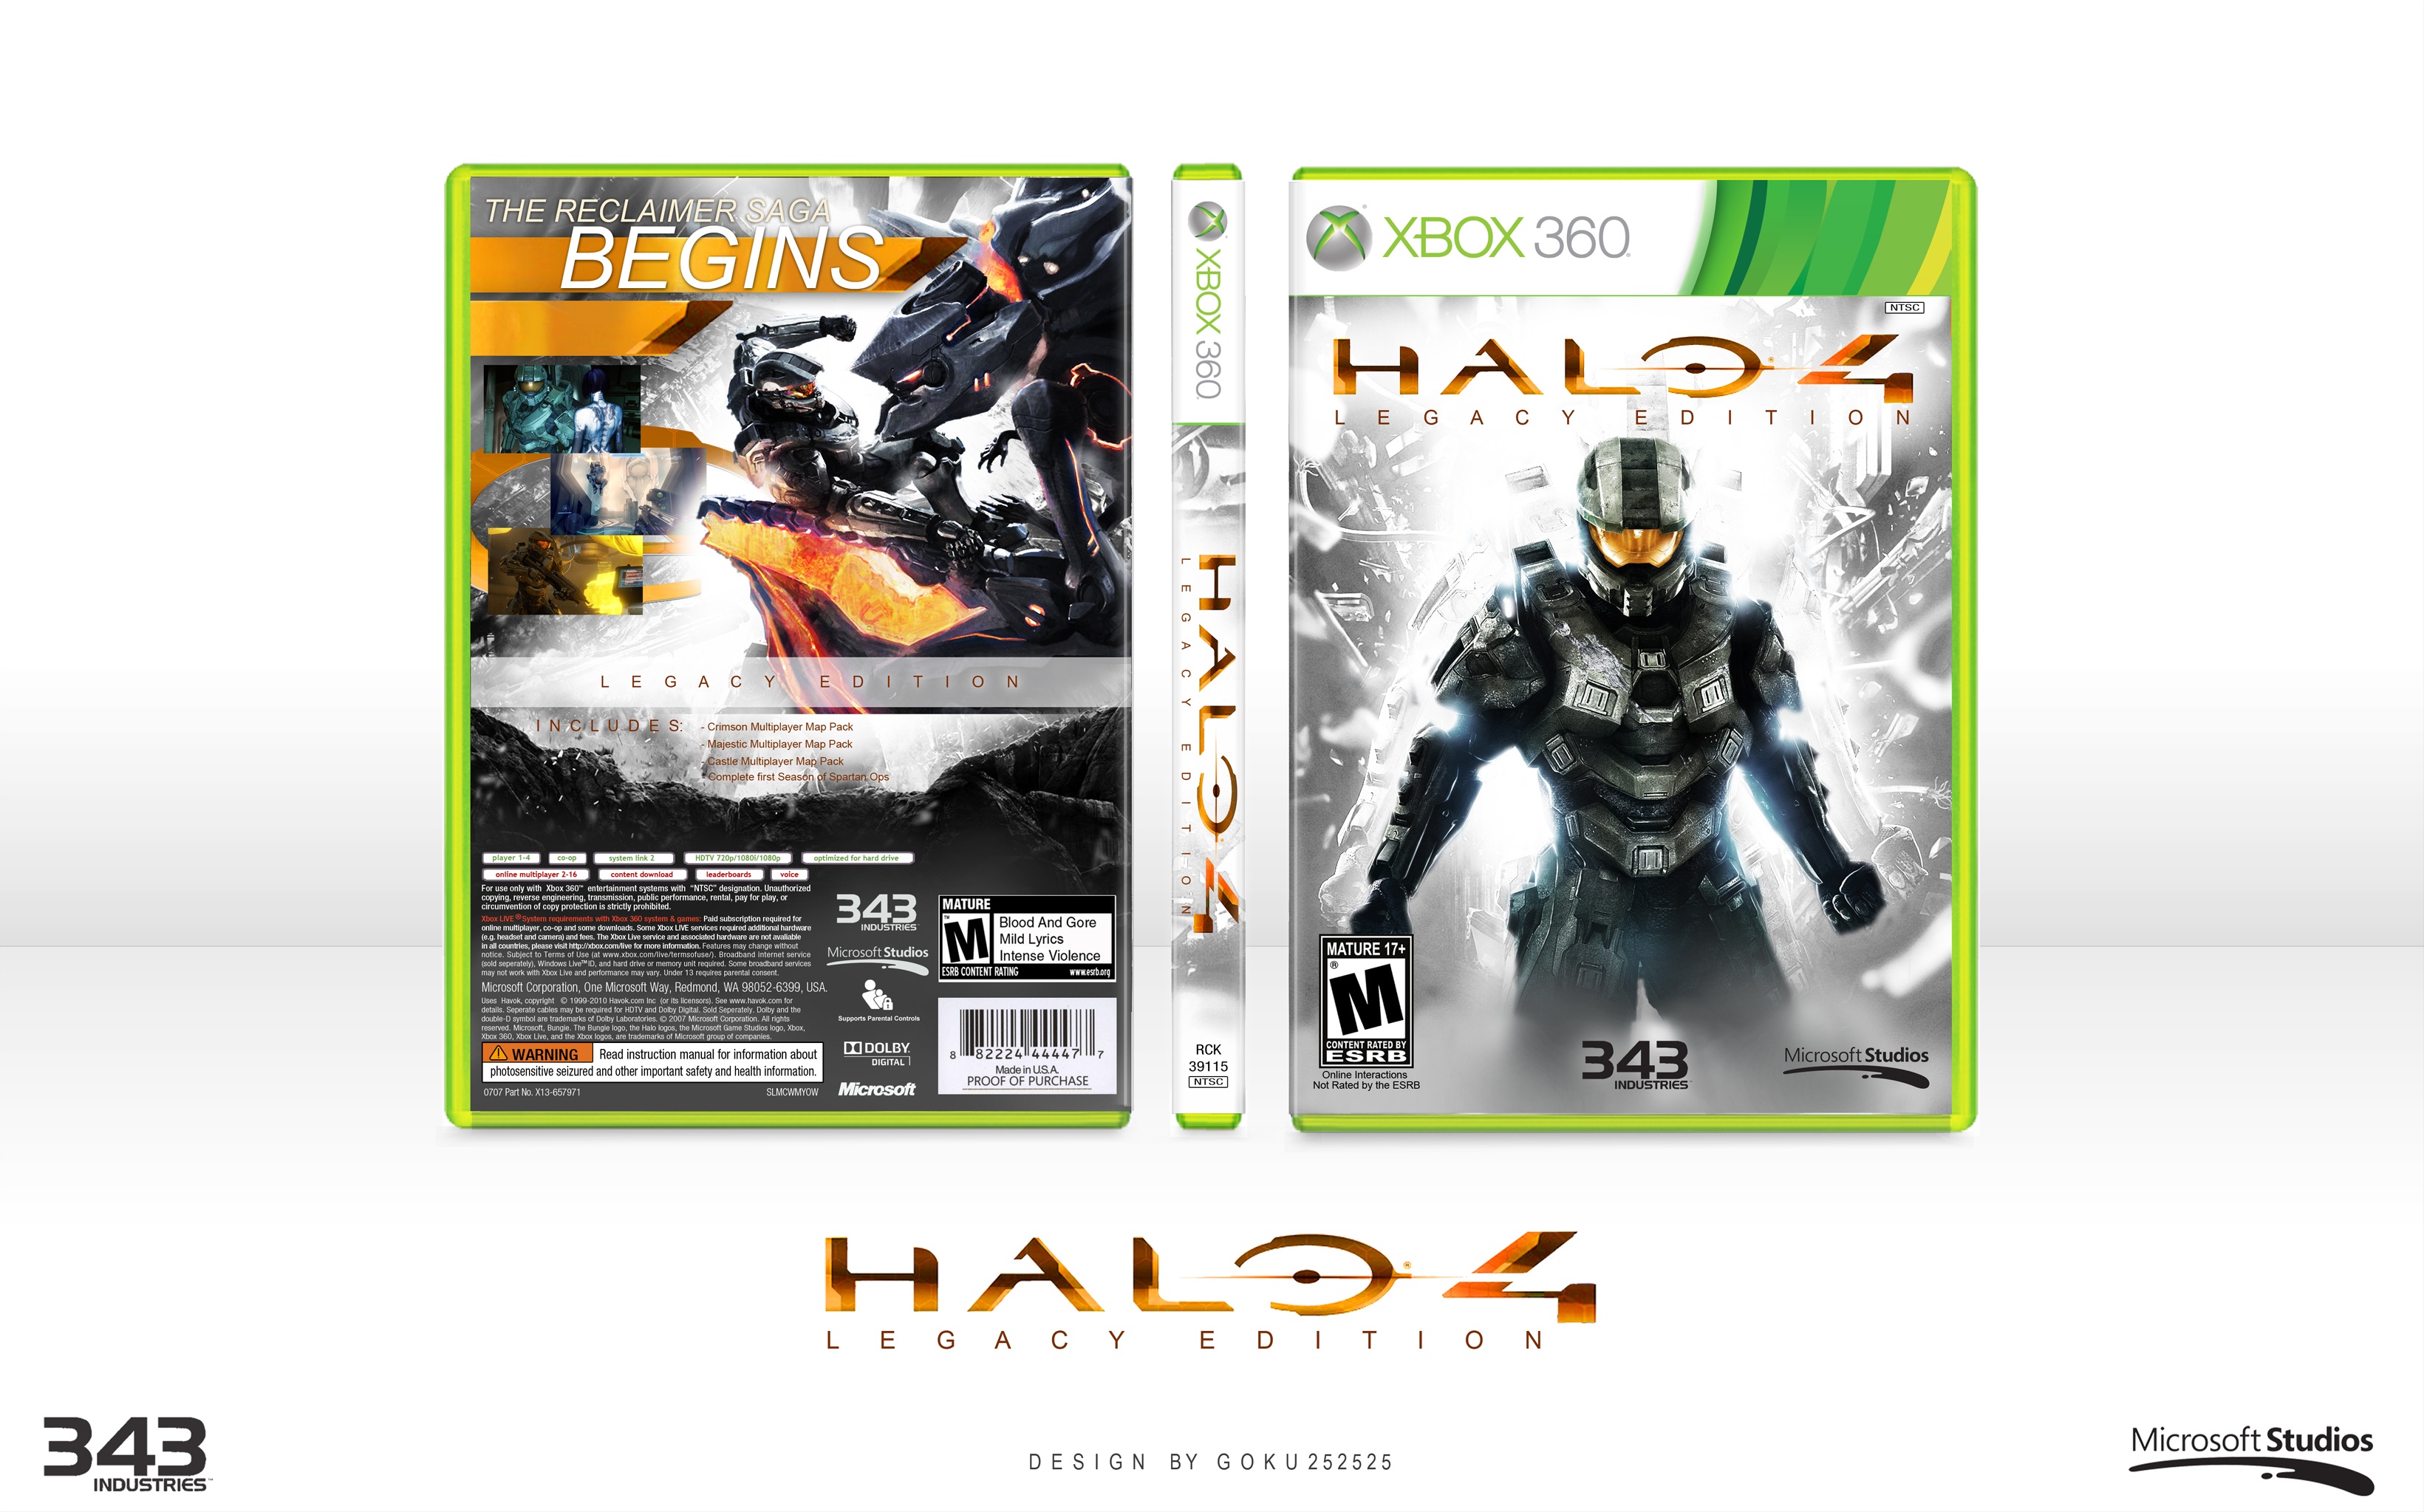 Halo 4: Legacy Edition box cover